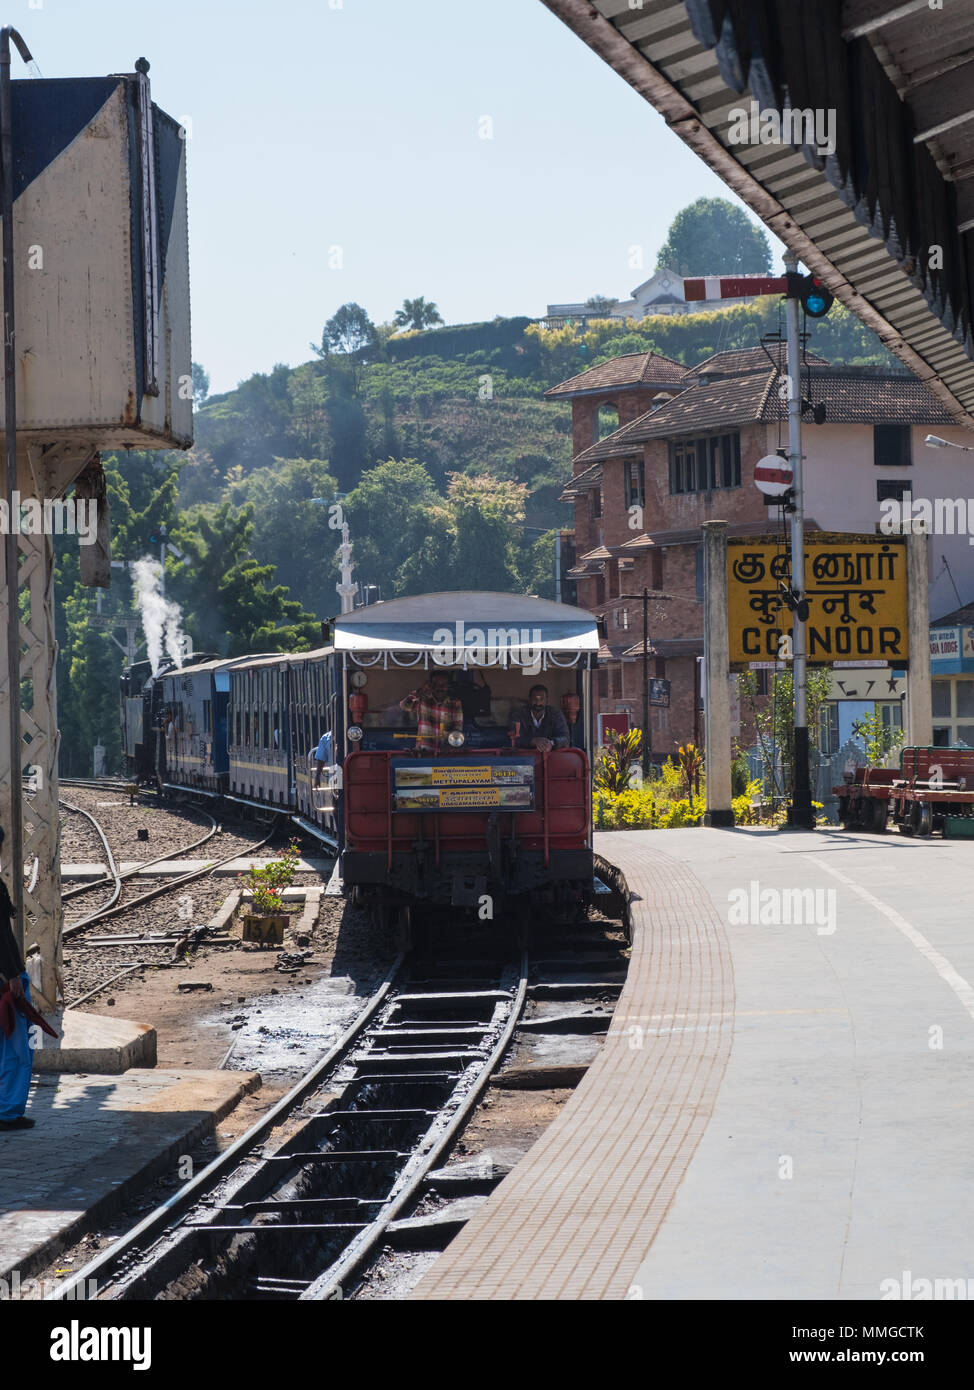 Coonoor, India - March 5, 2018: Steam train arriving from Mettupalayam on the Nilgiris Mountain Railway in Tamil Nadu Stock Photo